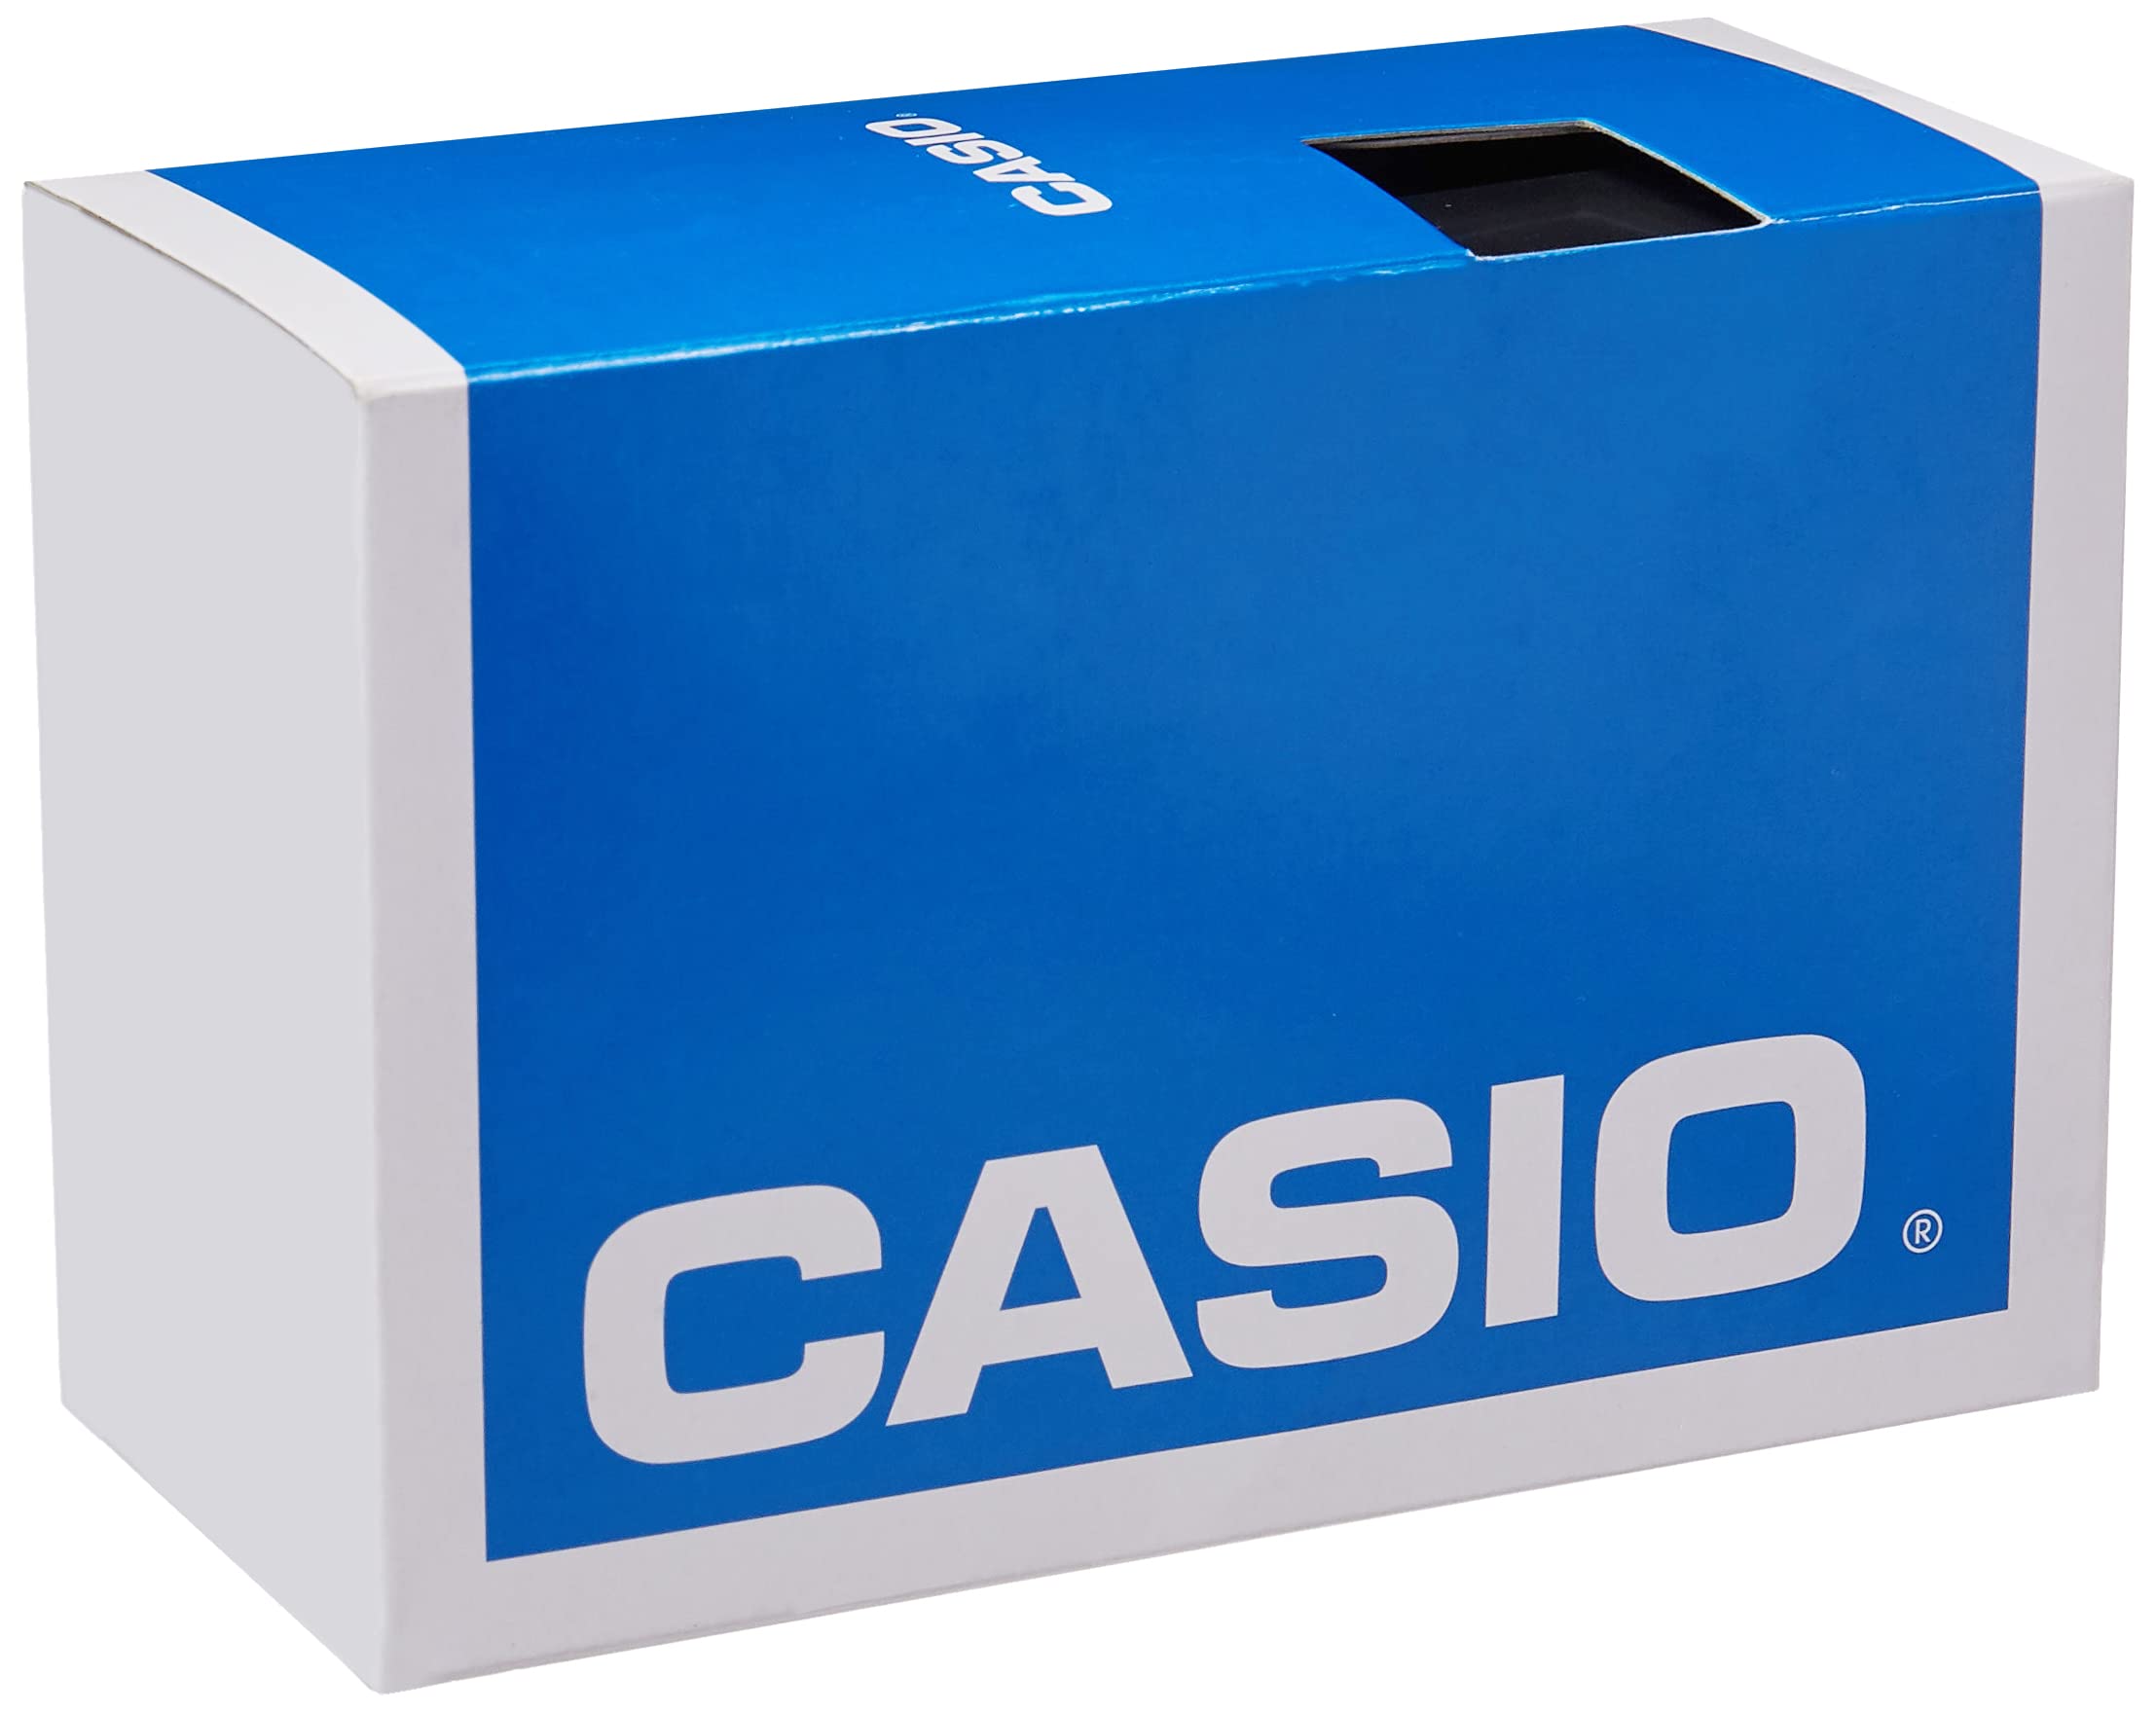 Casio 10-Year Battery Quartz Resin Strap Black 28.4 Casual Watch (Model: AEQ-110W-2A3VCF) Rose Gold